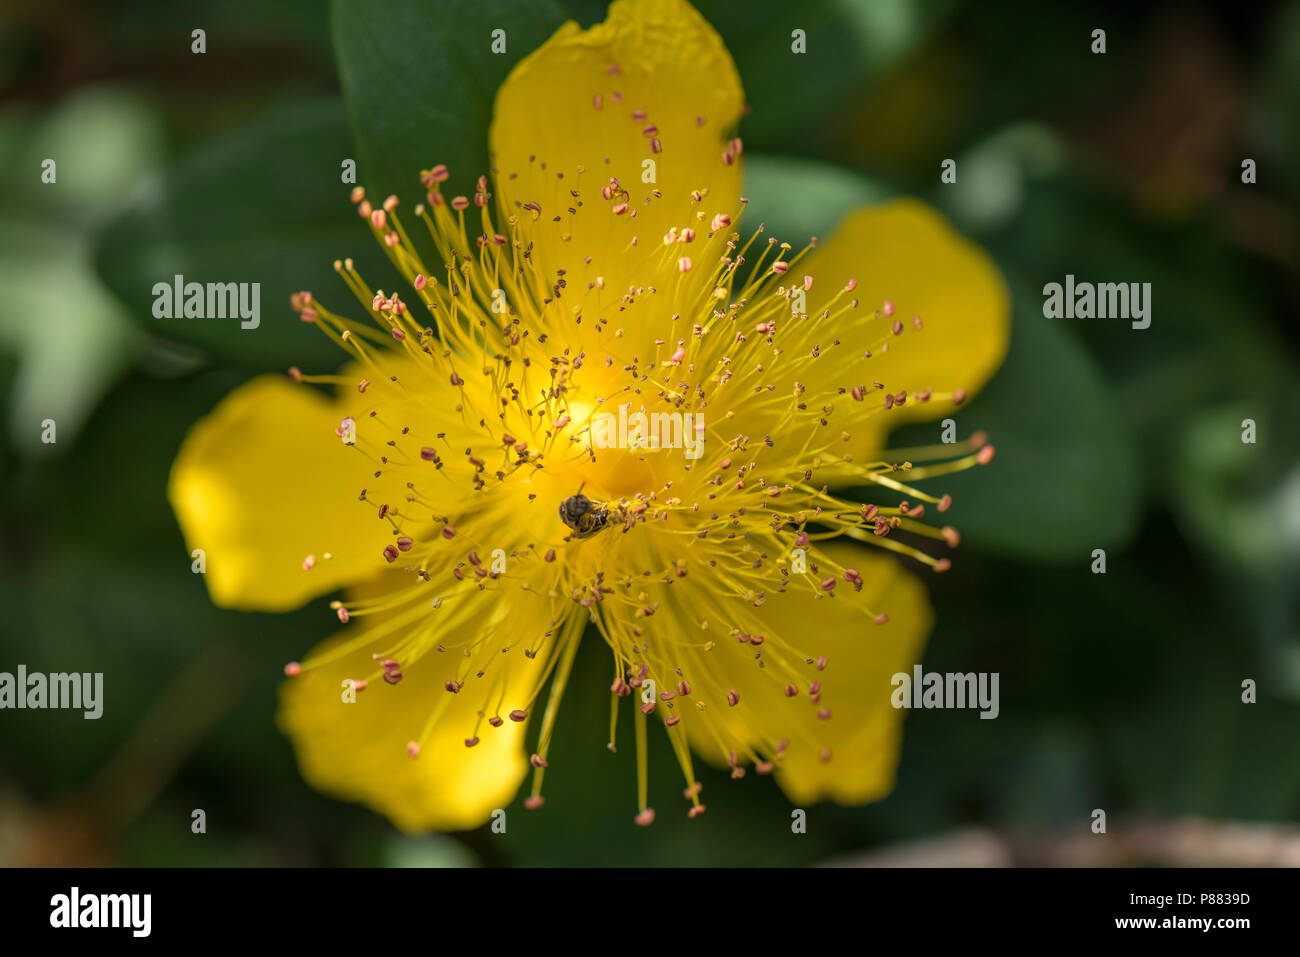 yellow hypericum flower, st johns wart plant. Stock Photo